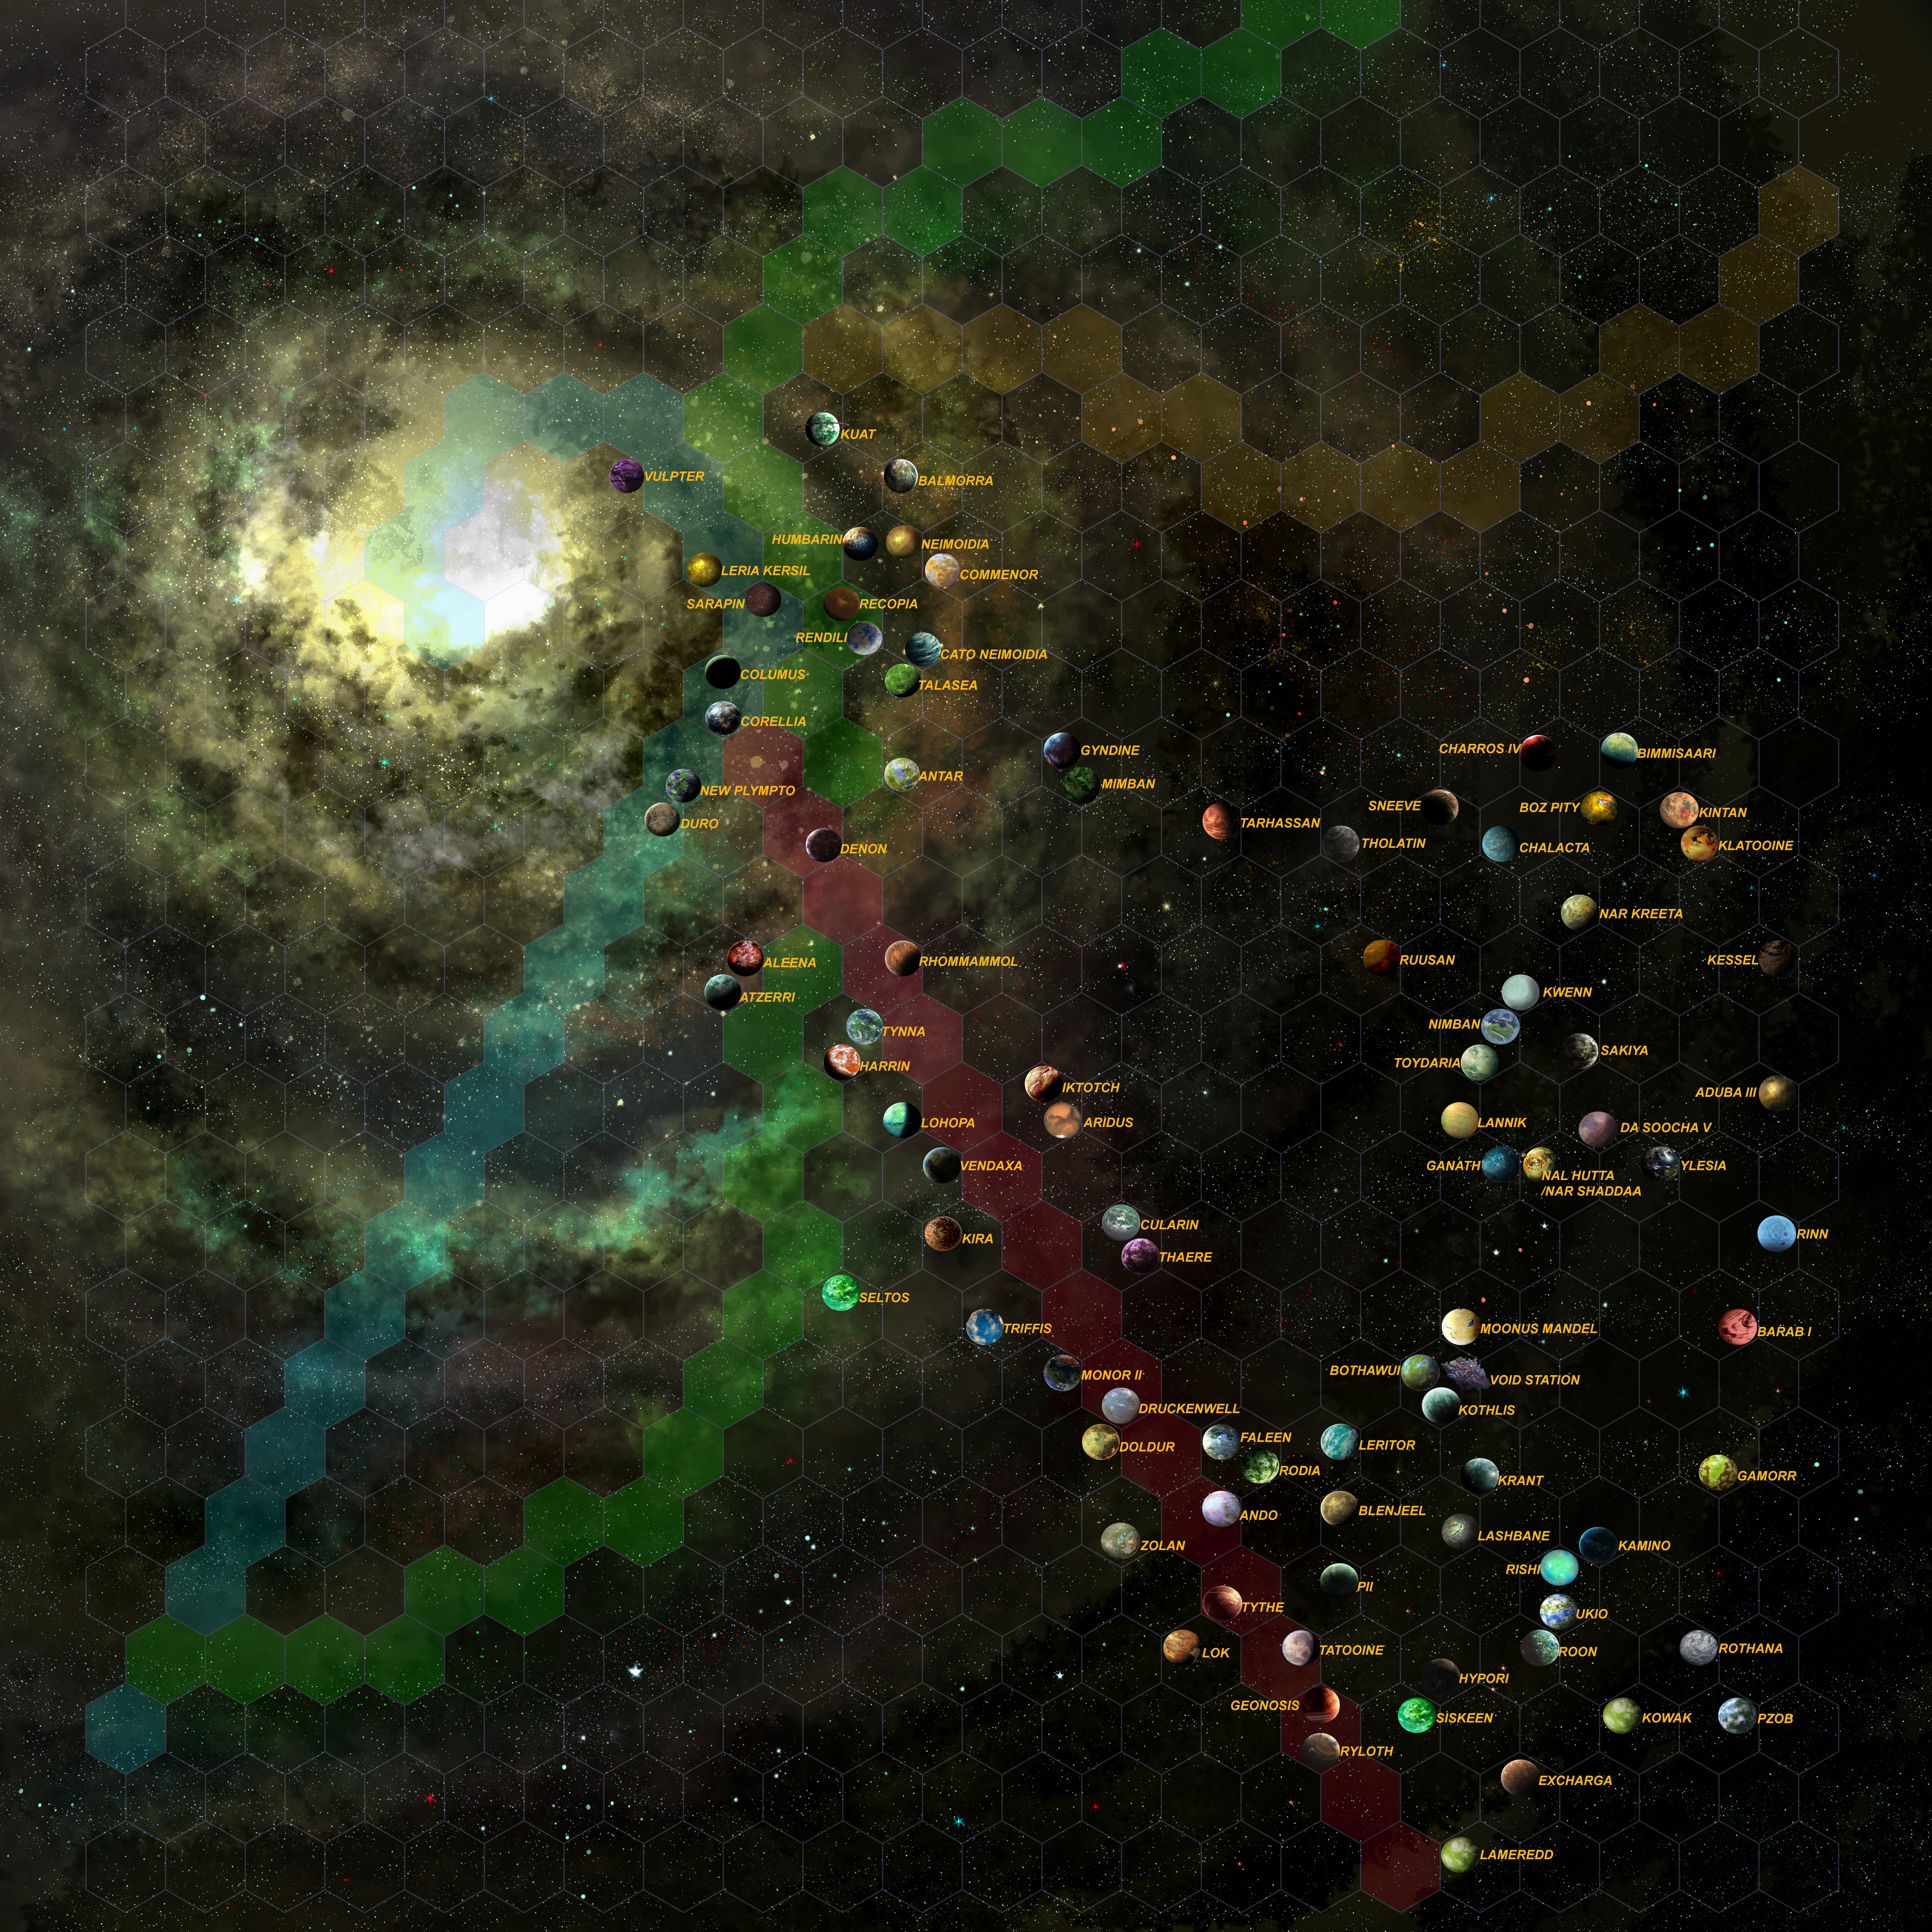 kevlar_s_star_wars_galaxy_map_by_draugtr